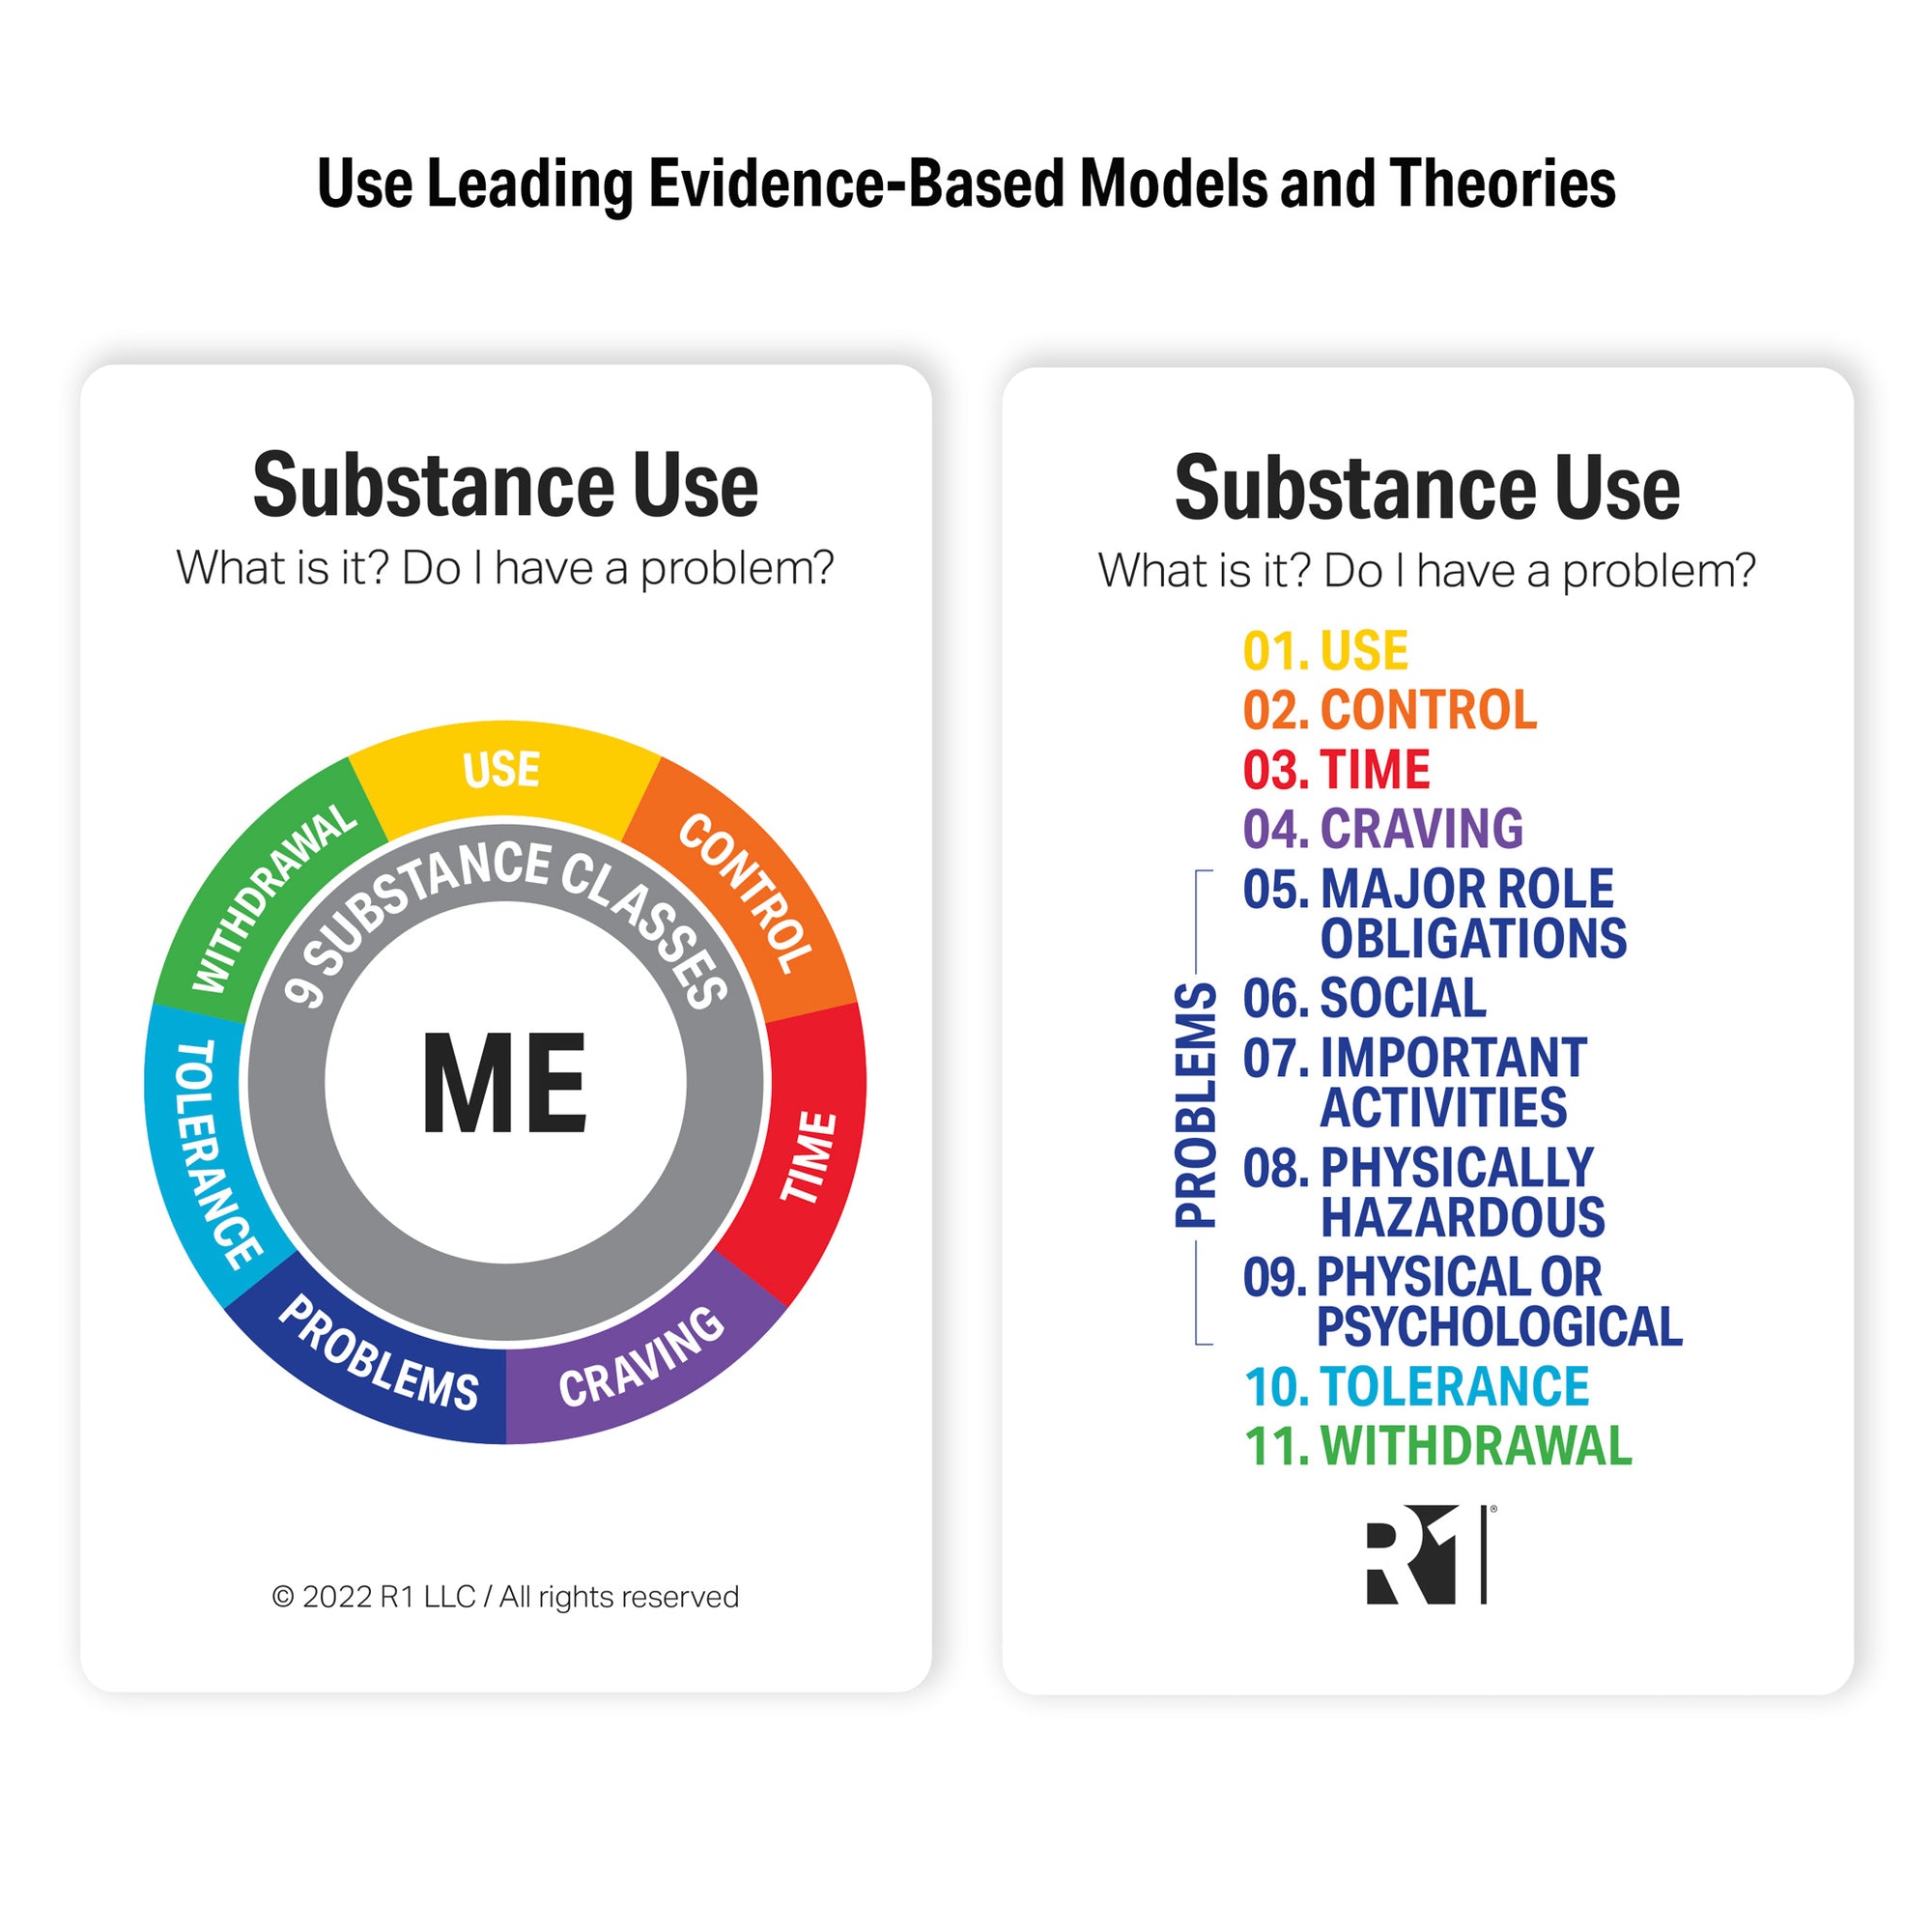 Substance Use Group Kit — 12 decks